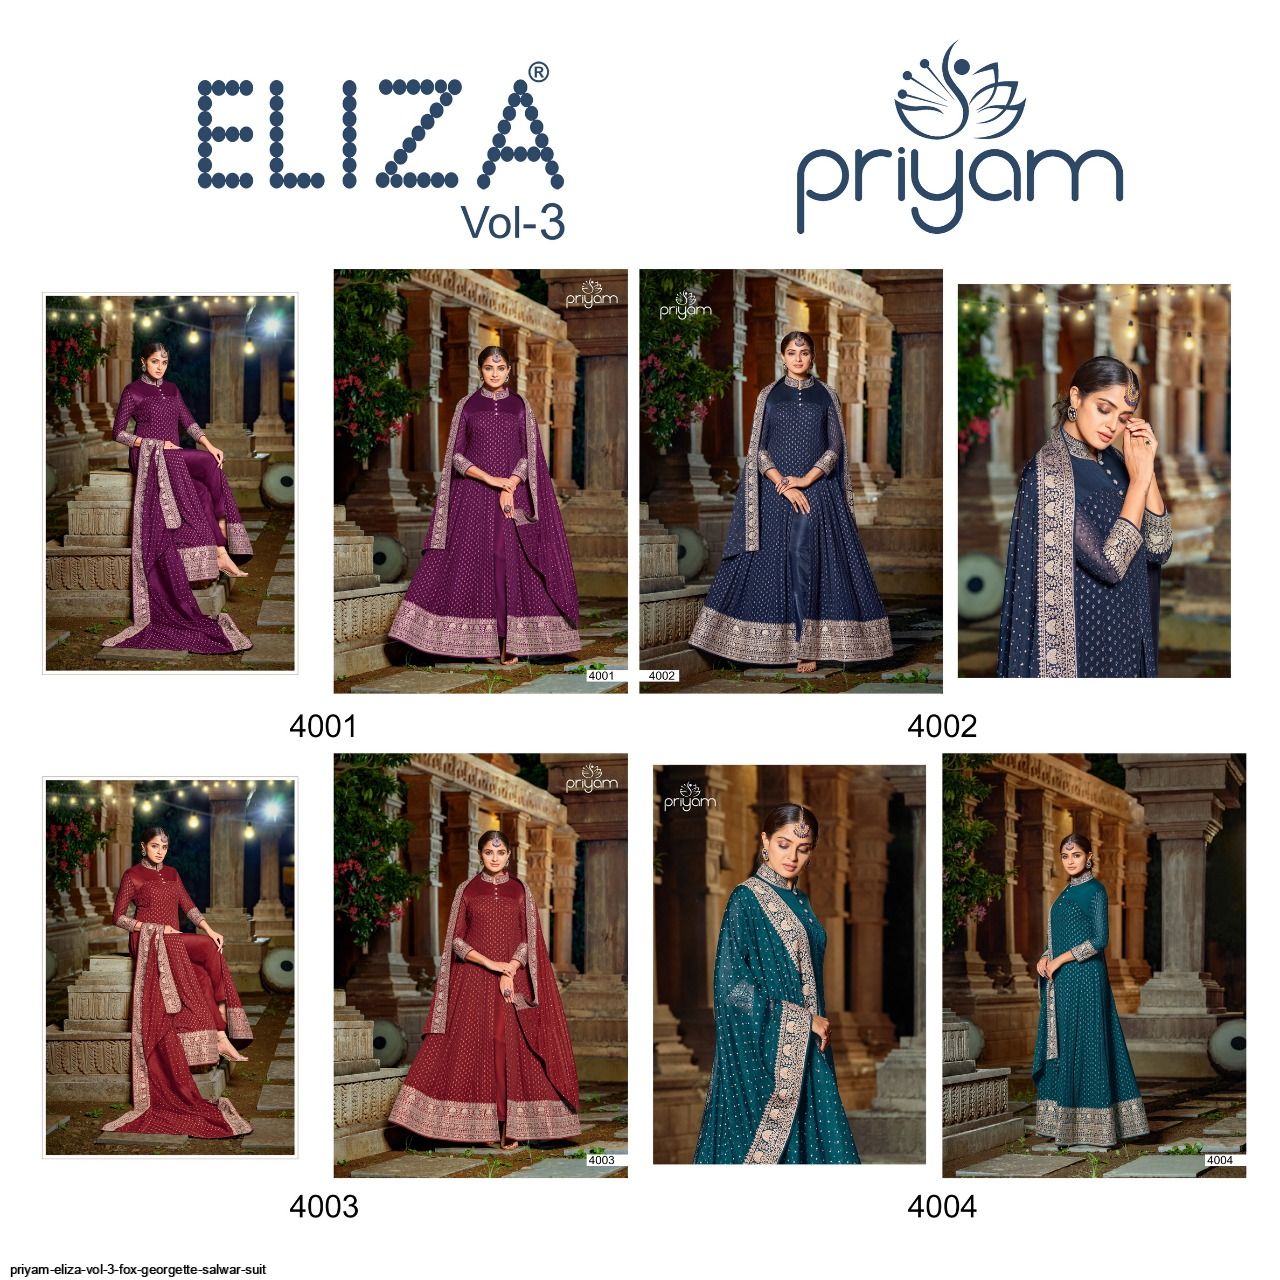 Priyam Eliza Vol 3 Fox Georgette Salwar Suit At Saidharanx